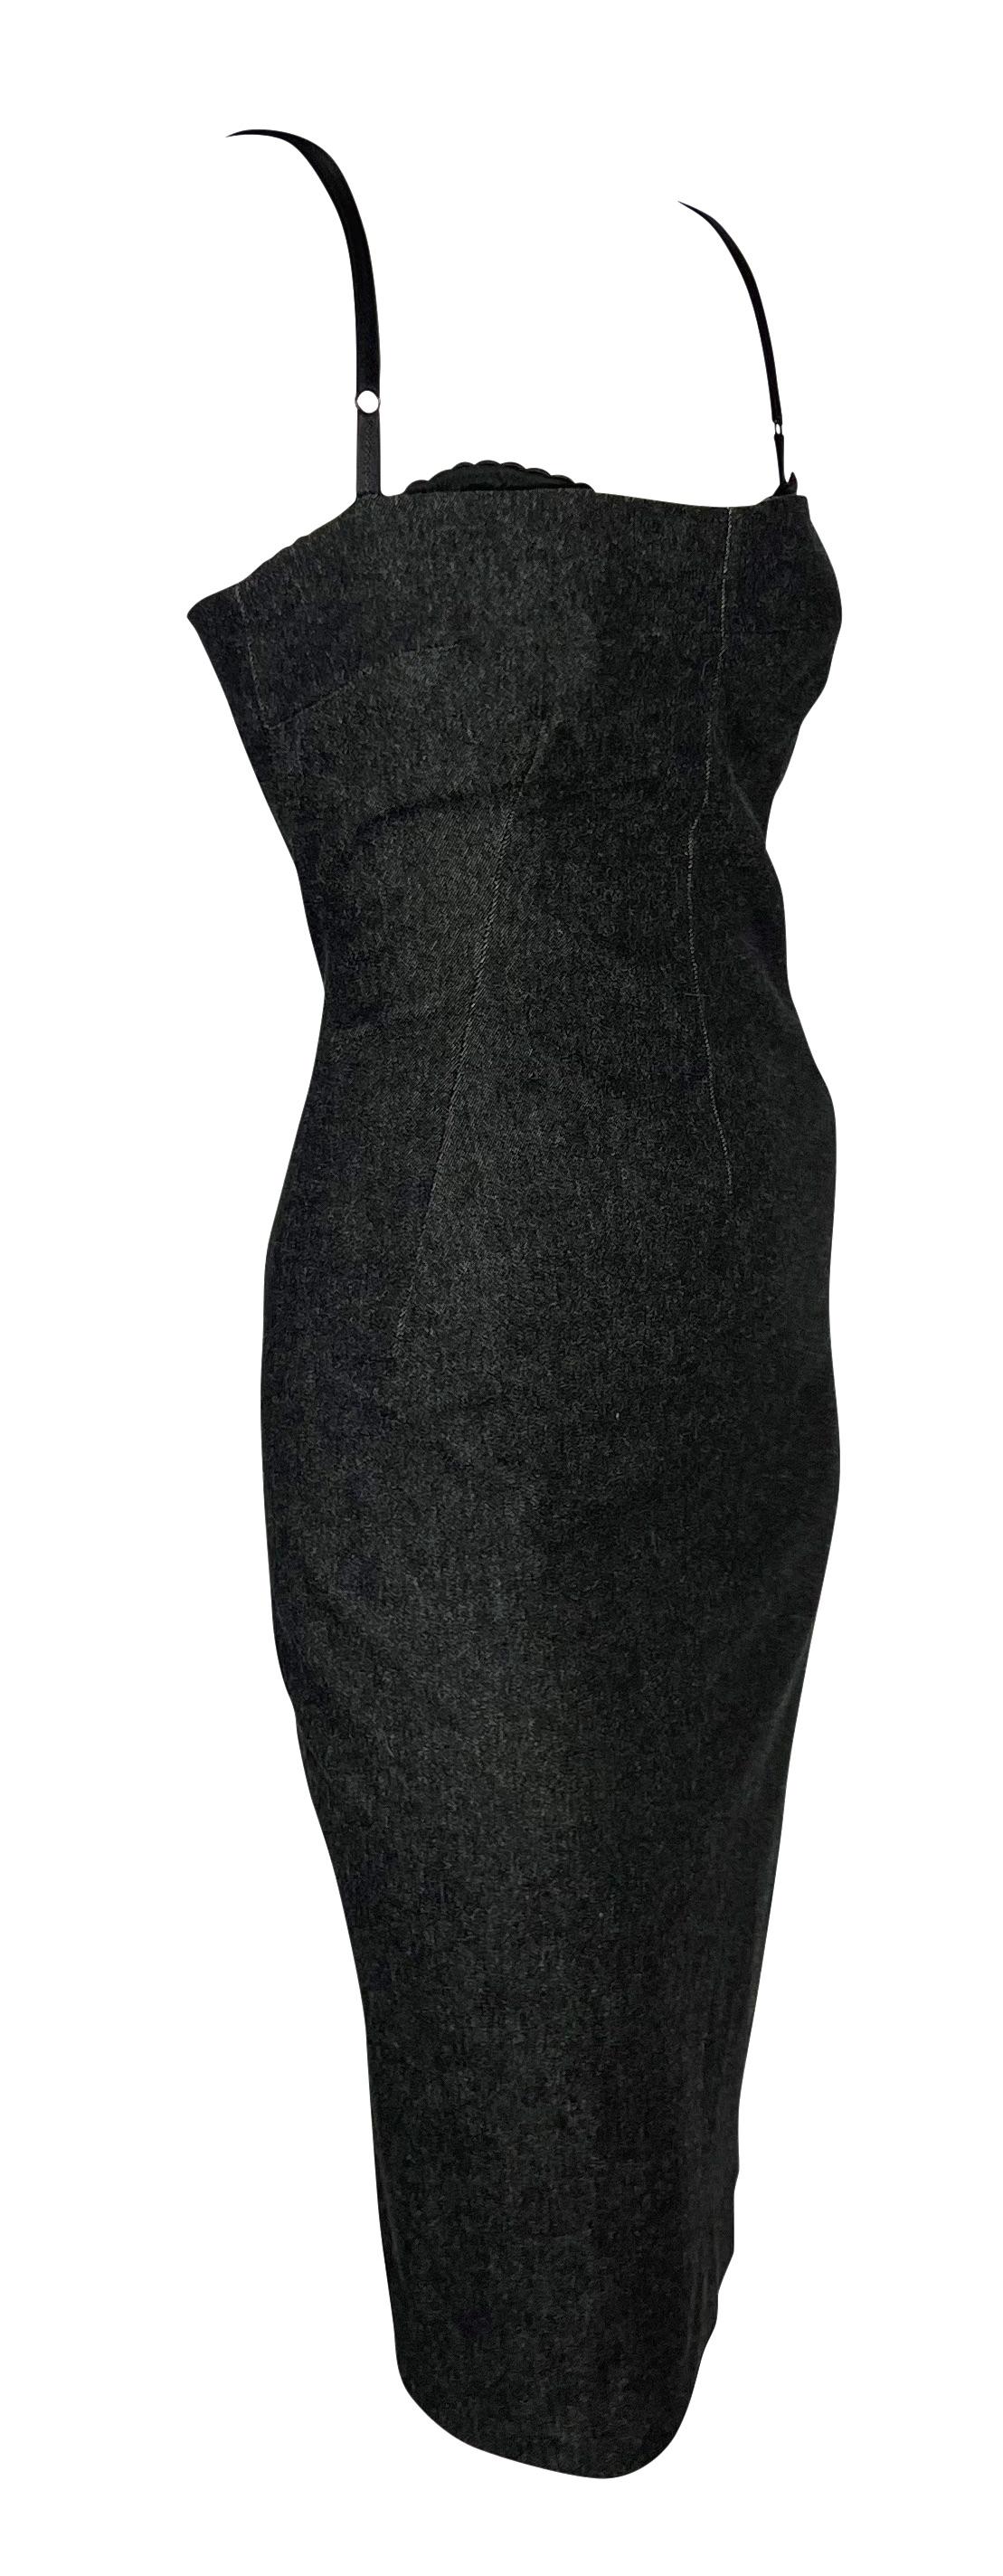 2000s Dolce & Gabbana Black Stretch Denim Bodycon Pin-Up Dress For Sale 2